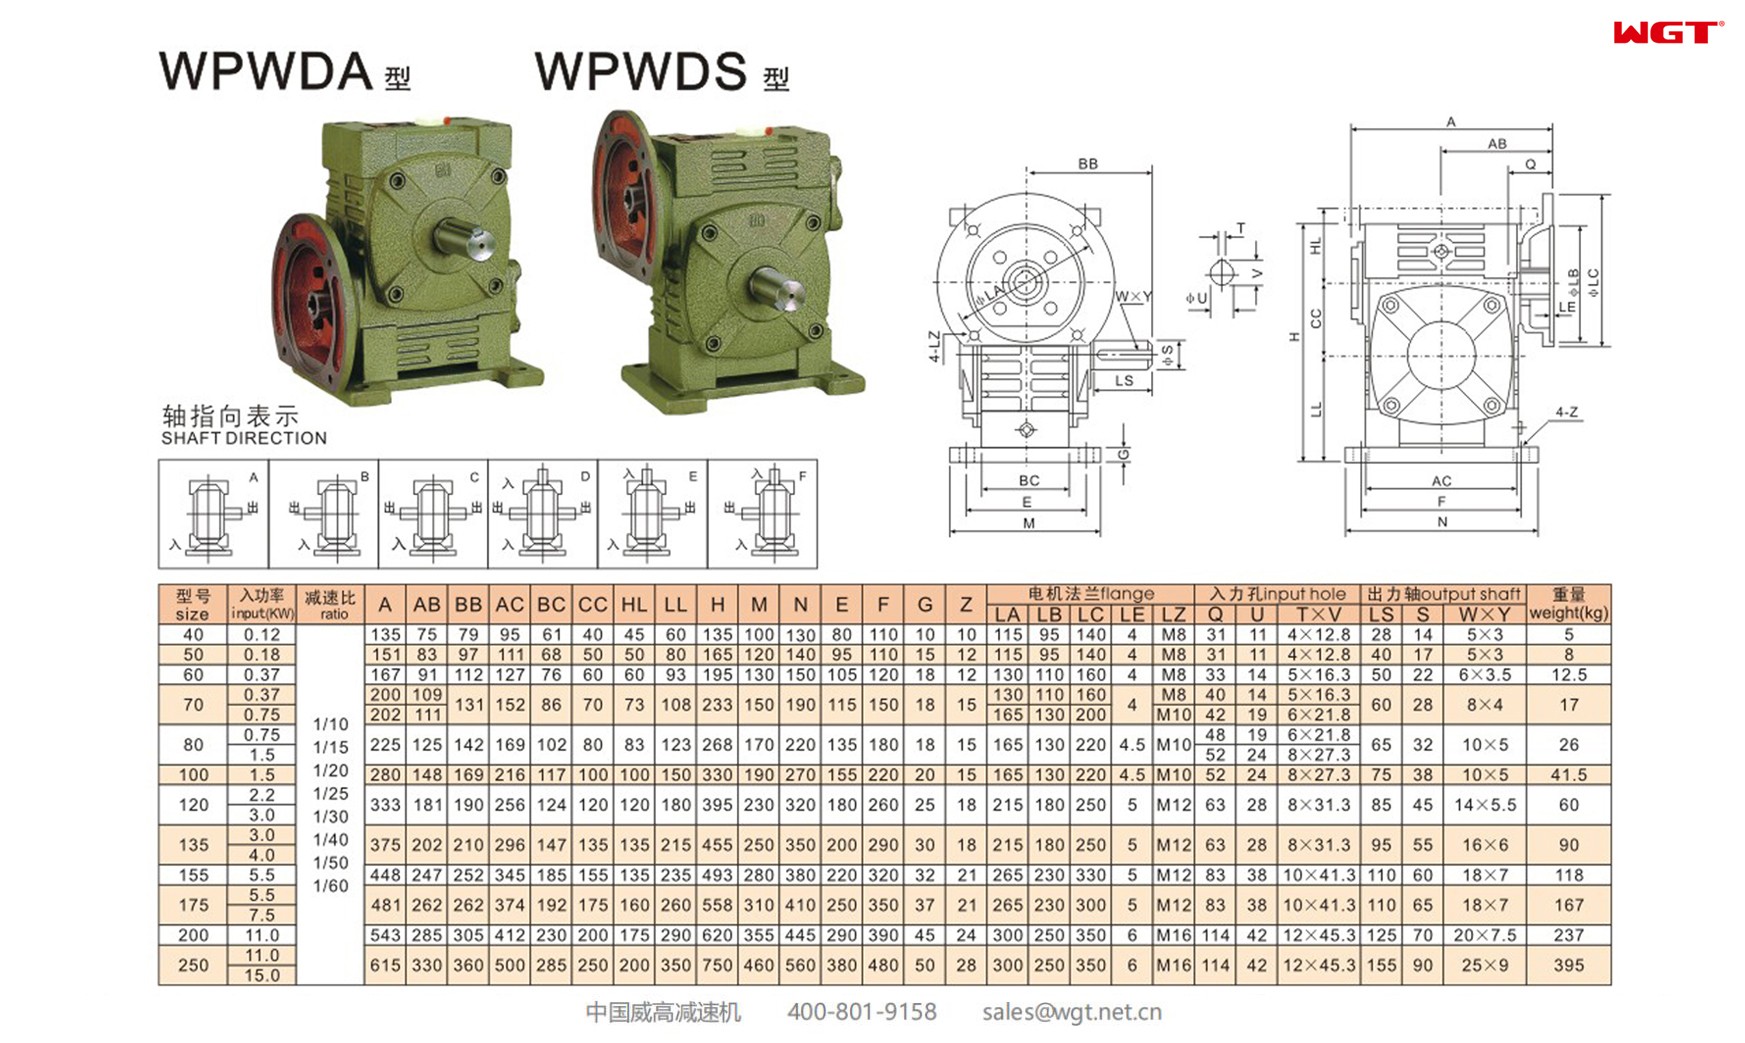 WPWDS40 worm gear reducer universal speed reducer 